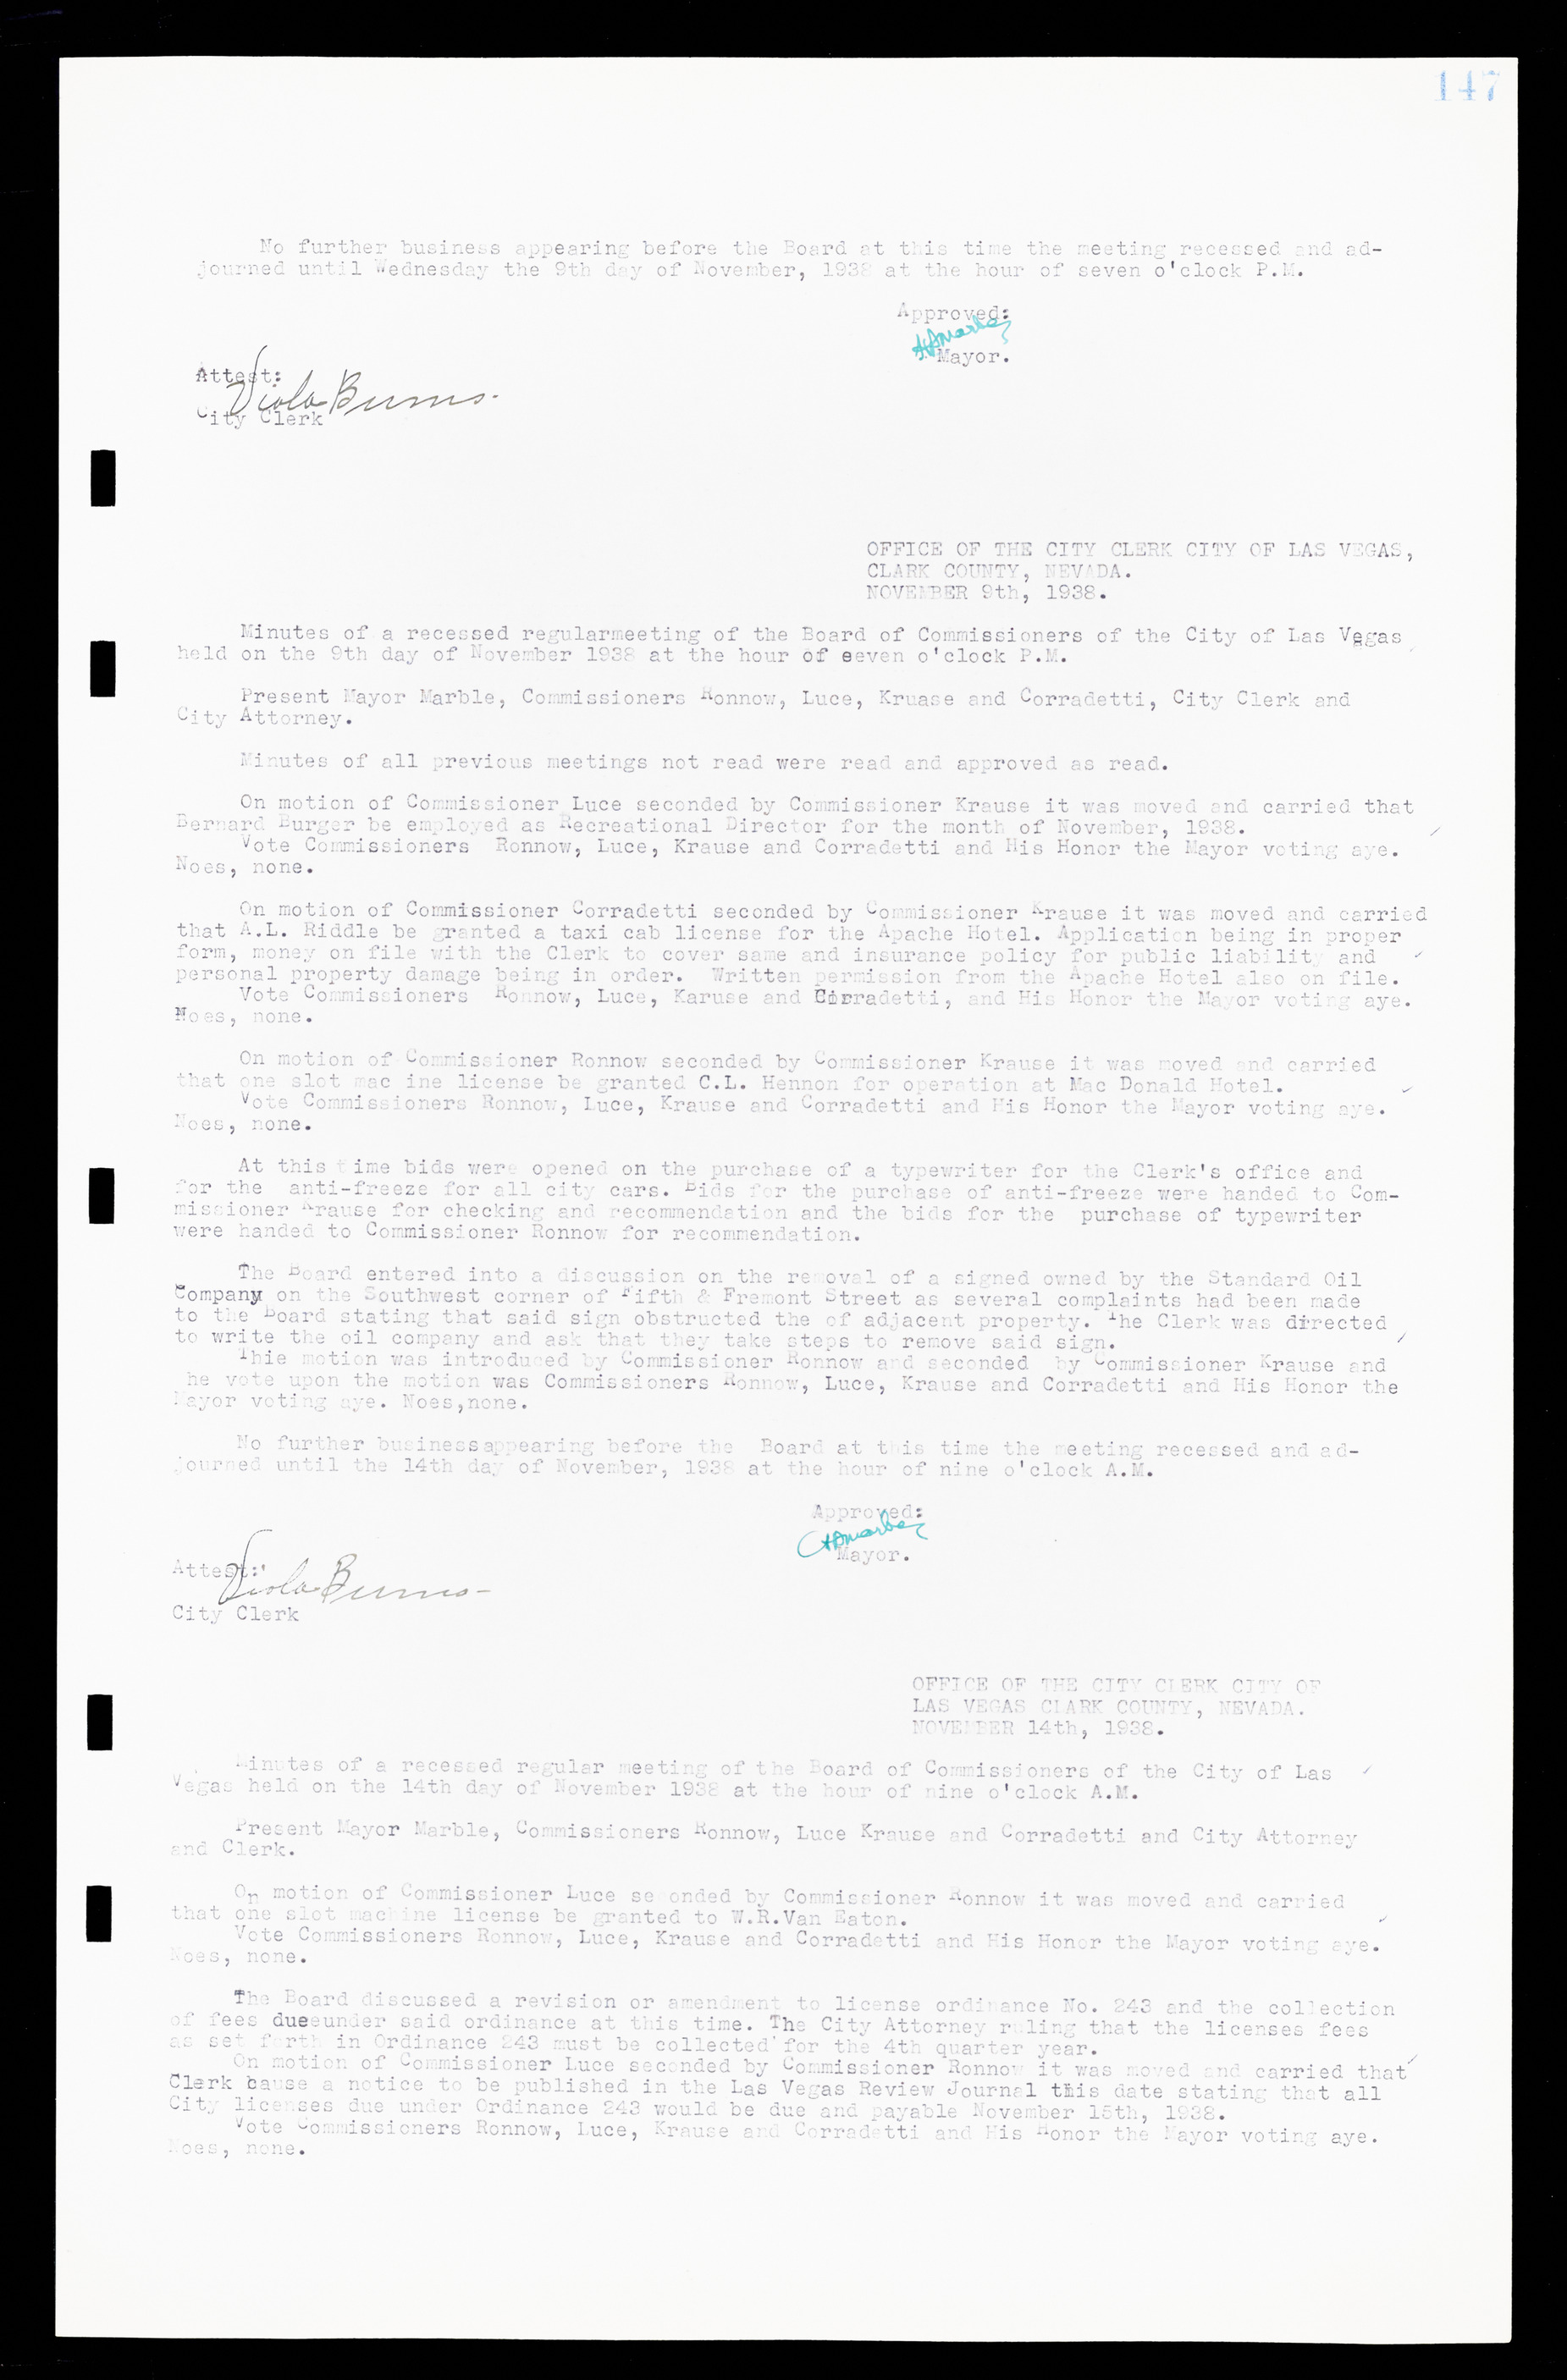 Las Vegas City Commission Minutes, February 17, 1937 to August 4, 1942, lvc000004-160